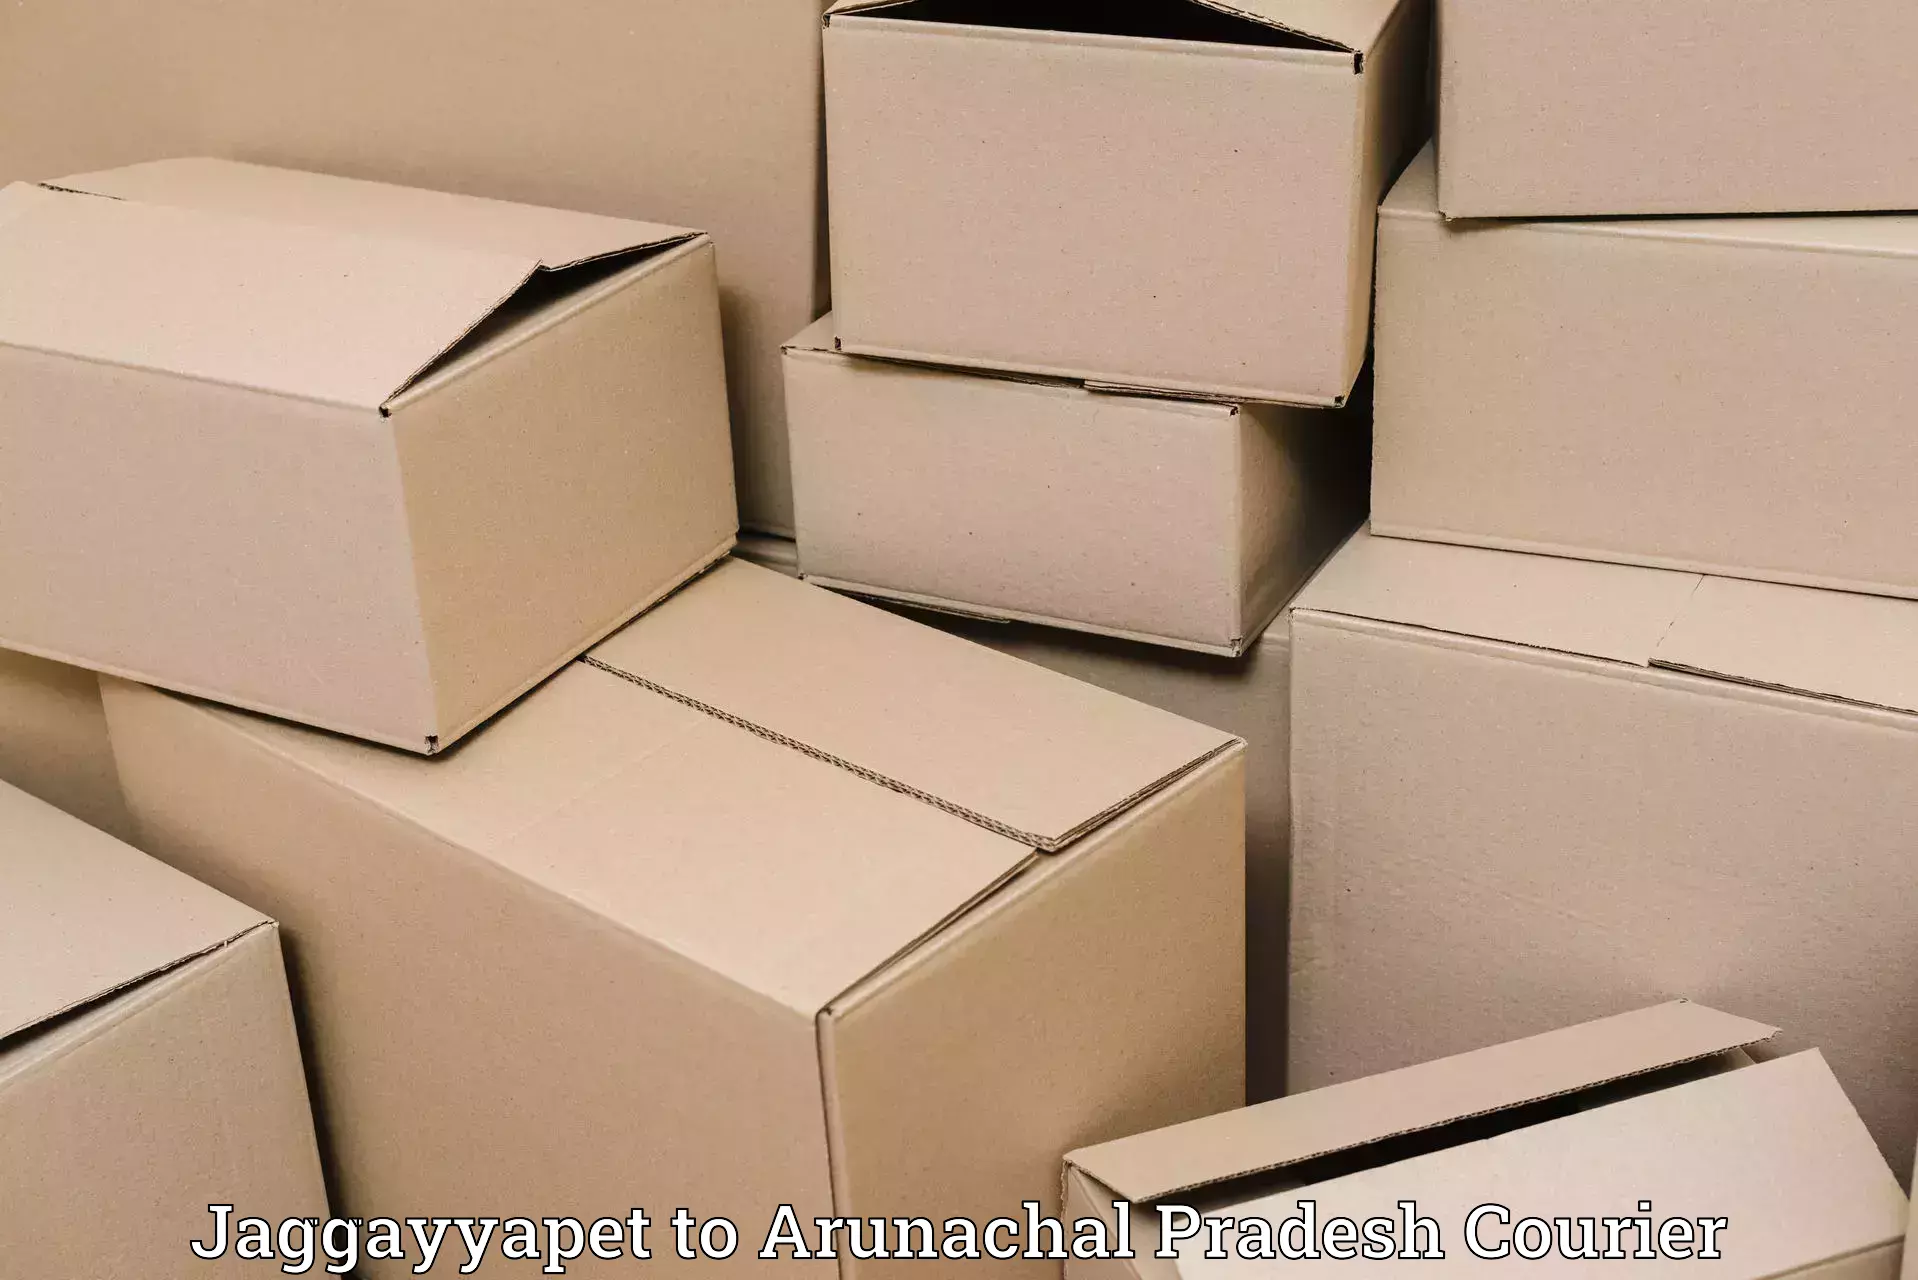 Global logistics network Jaggayyapet to Arunachal Pradesh